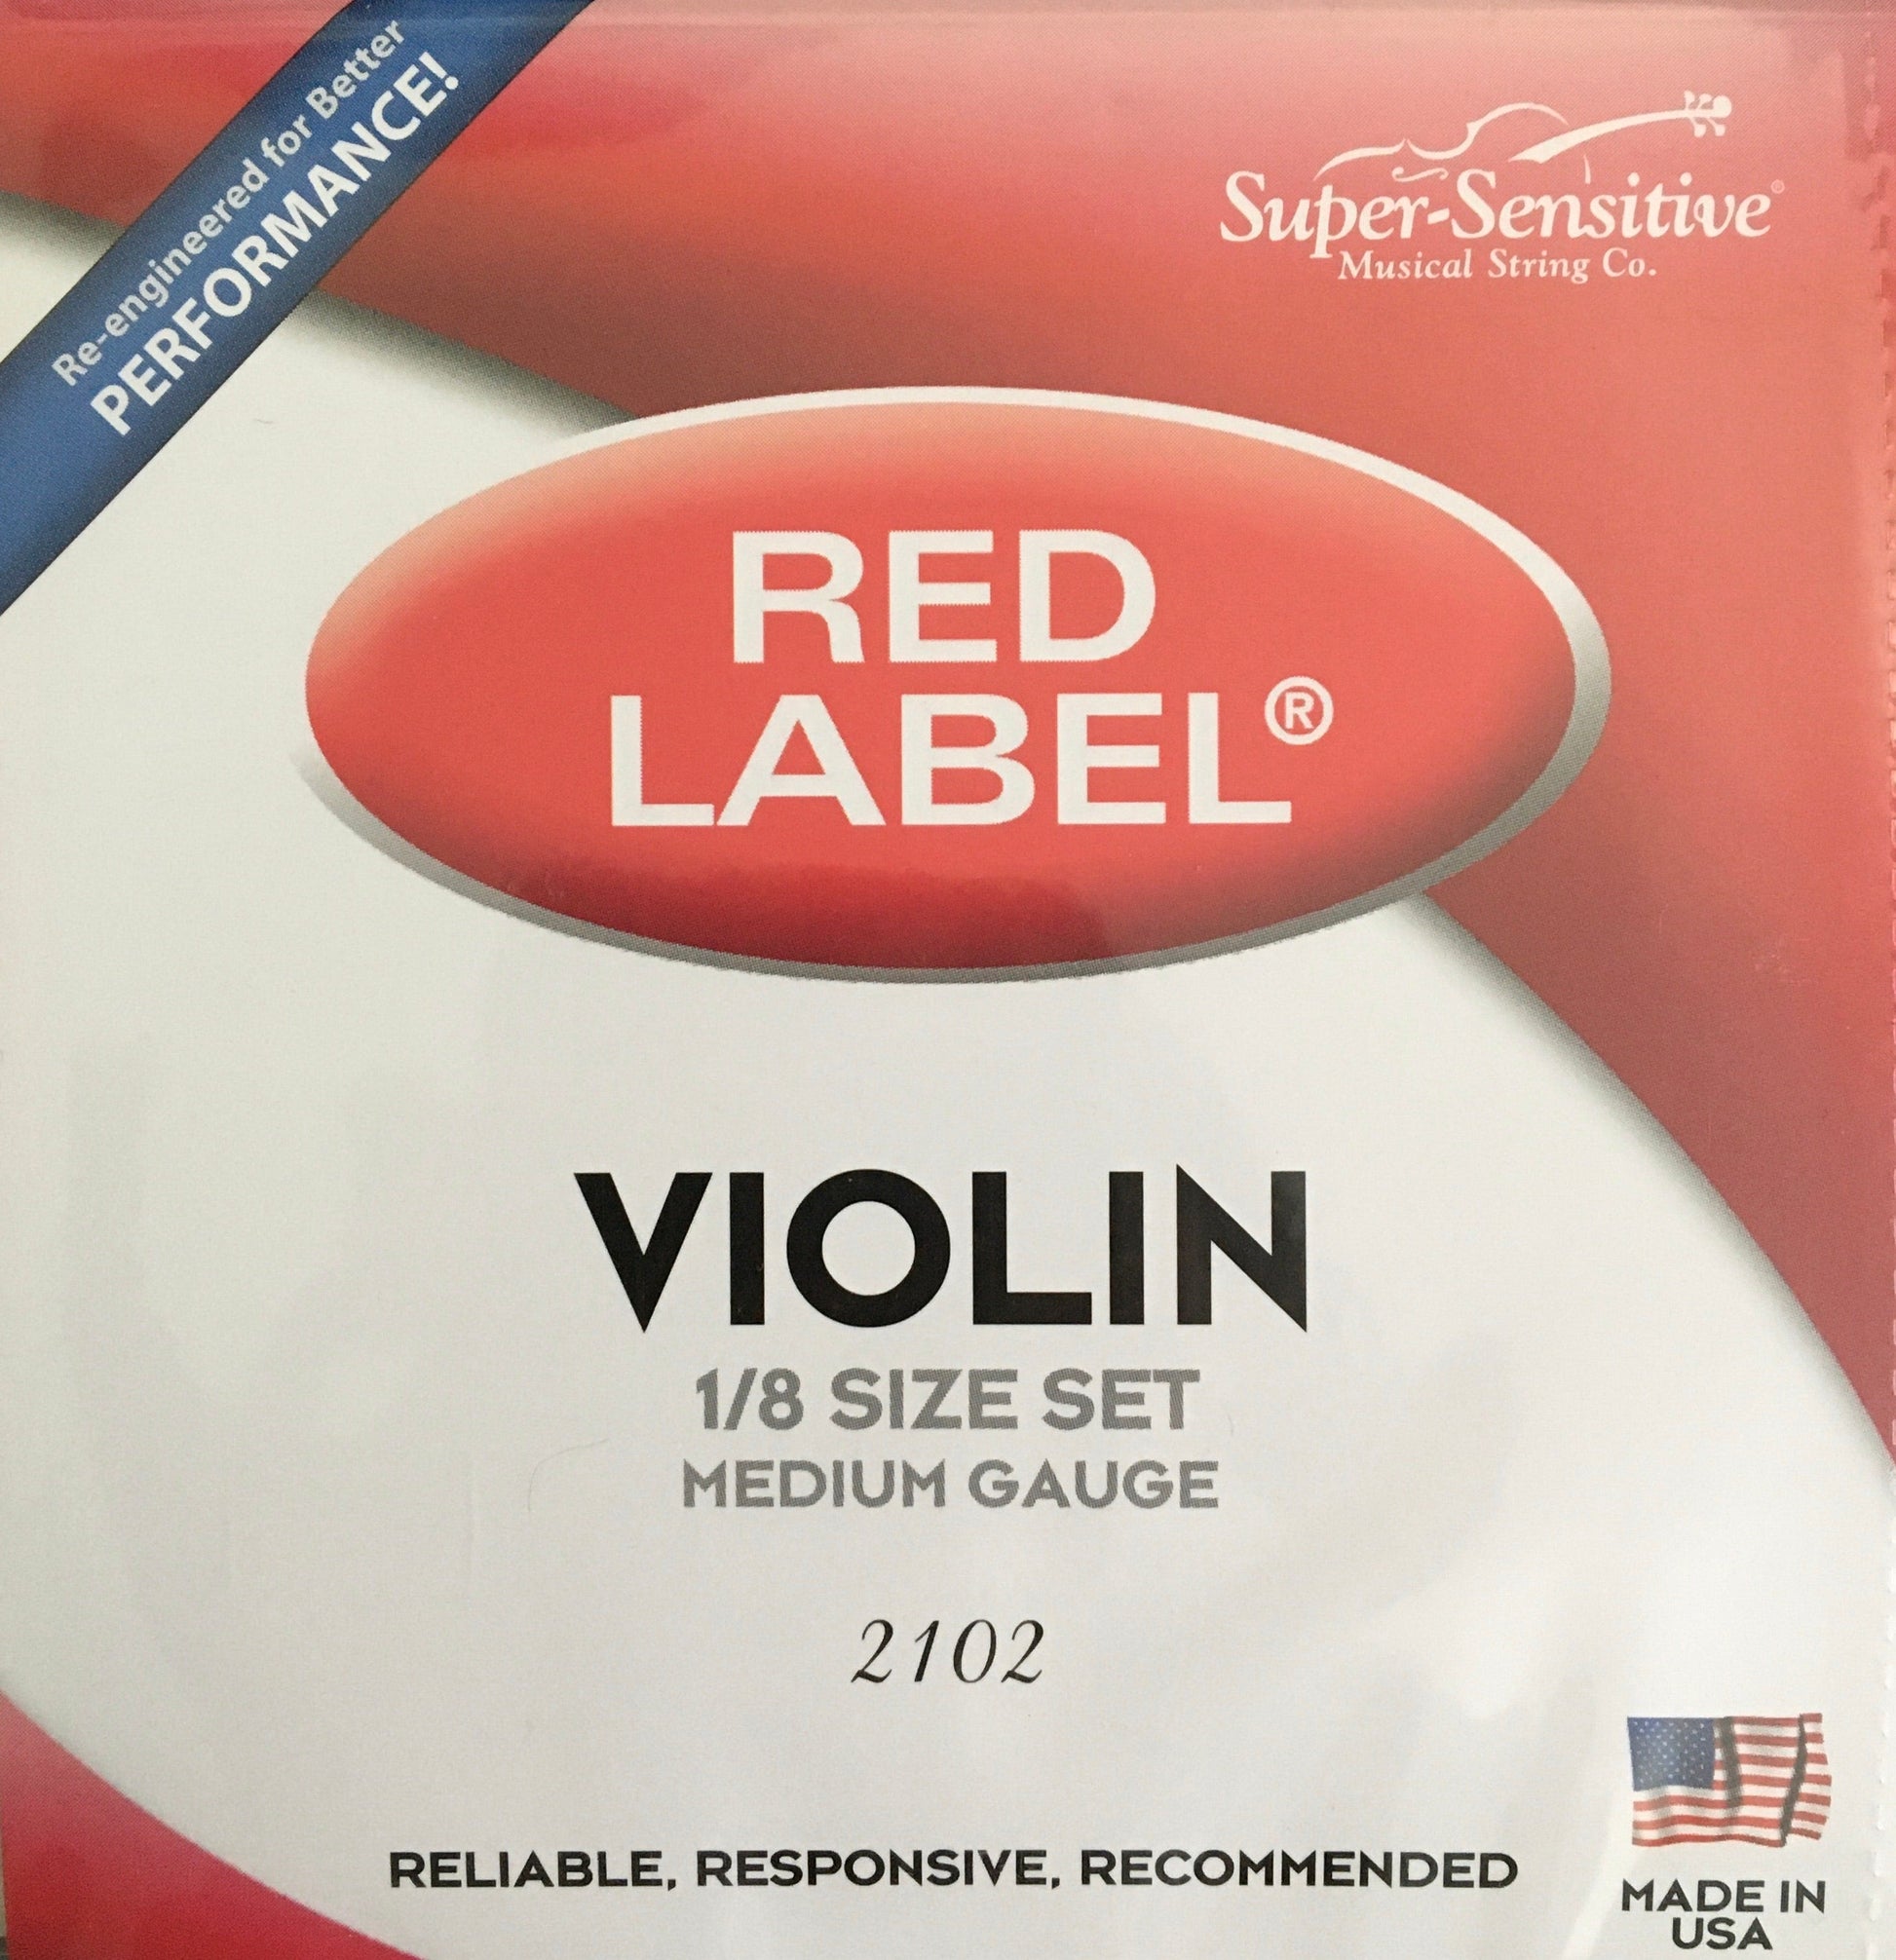 Super-Sensitive Red Label Violin Strings - 1/8 Strings, Bows & More